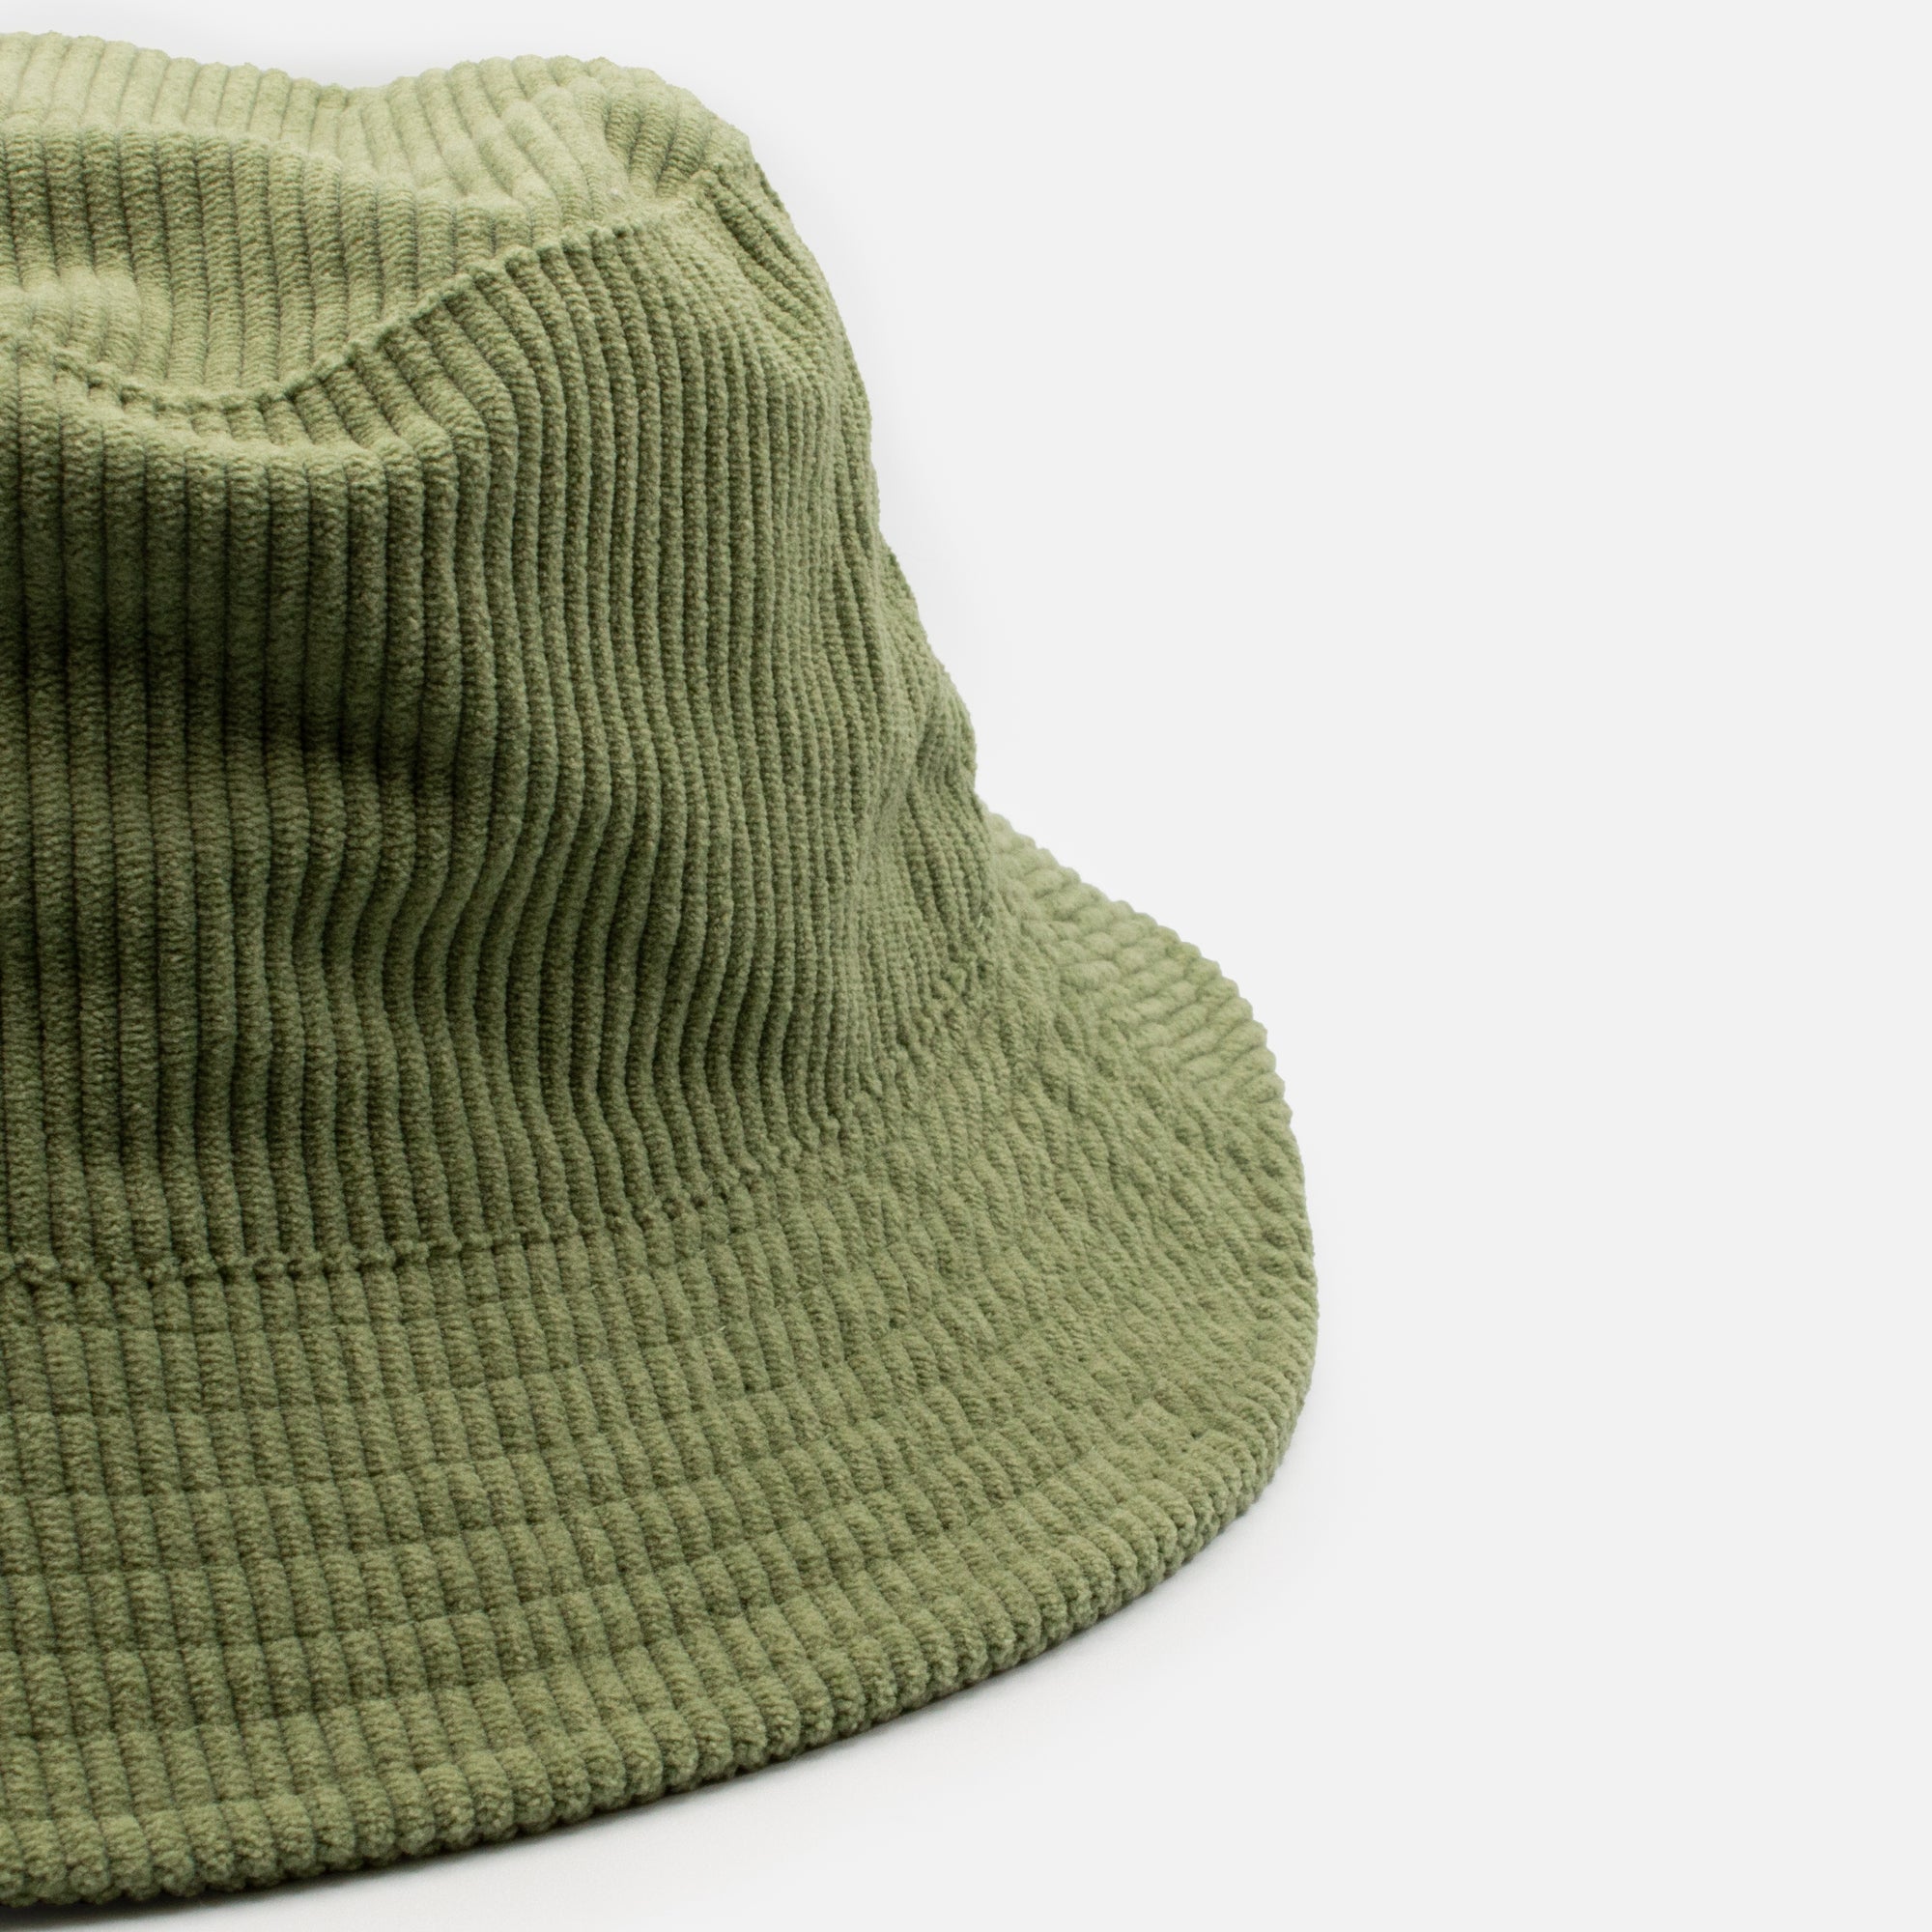 Green ribbed bucket hat